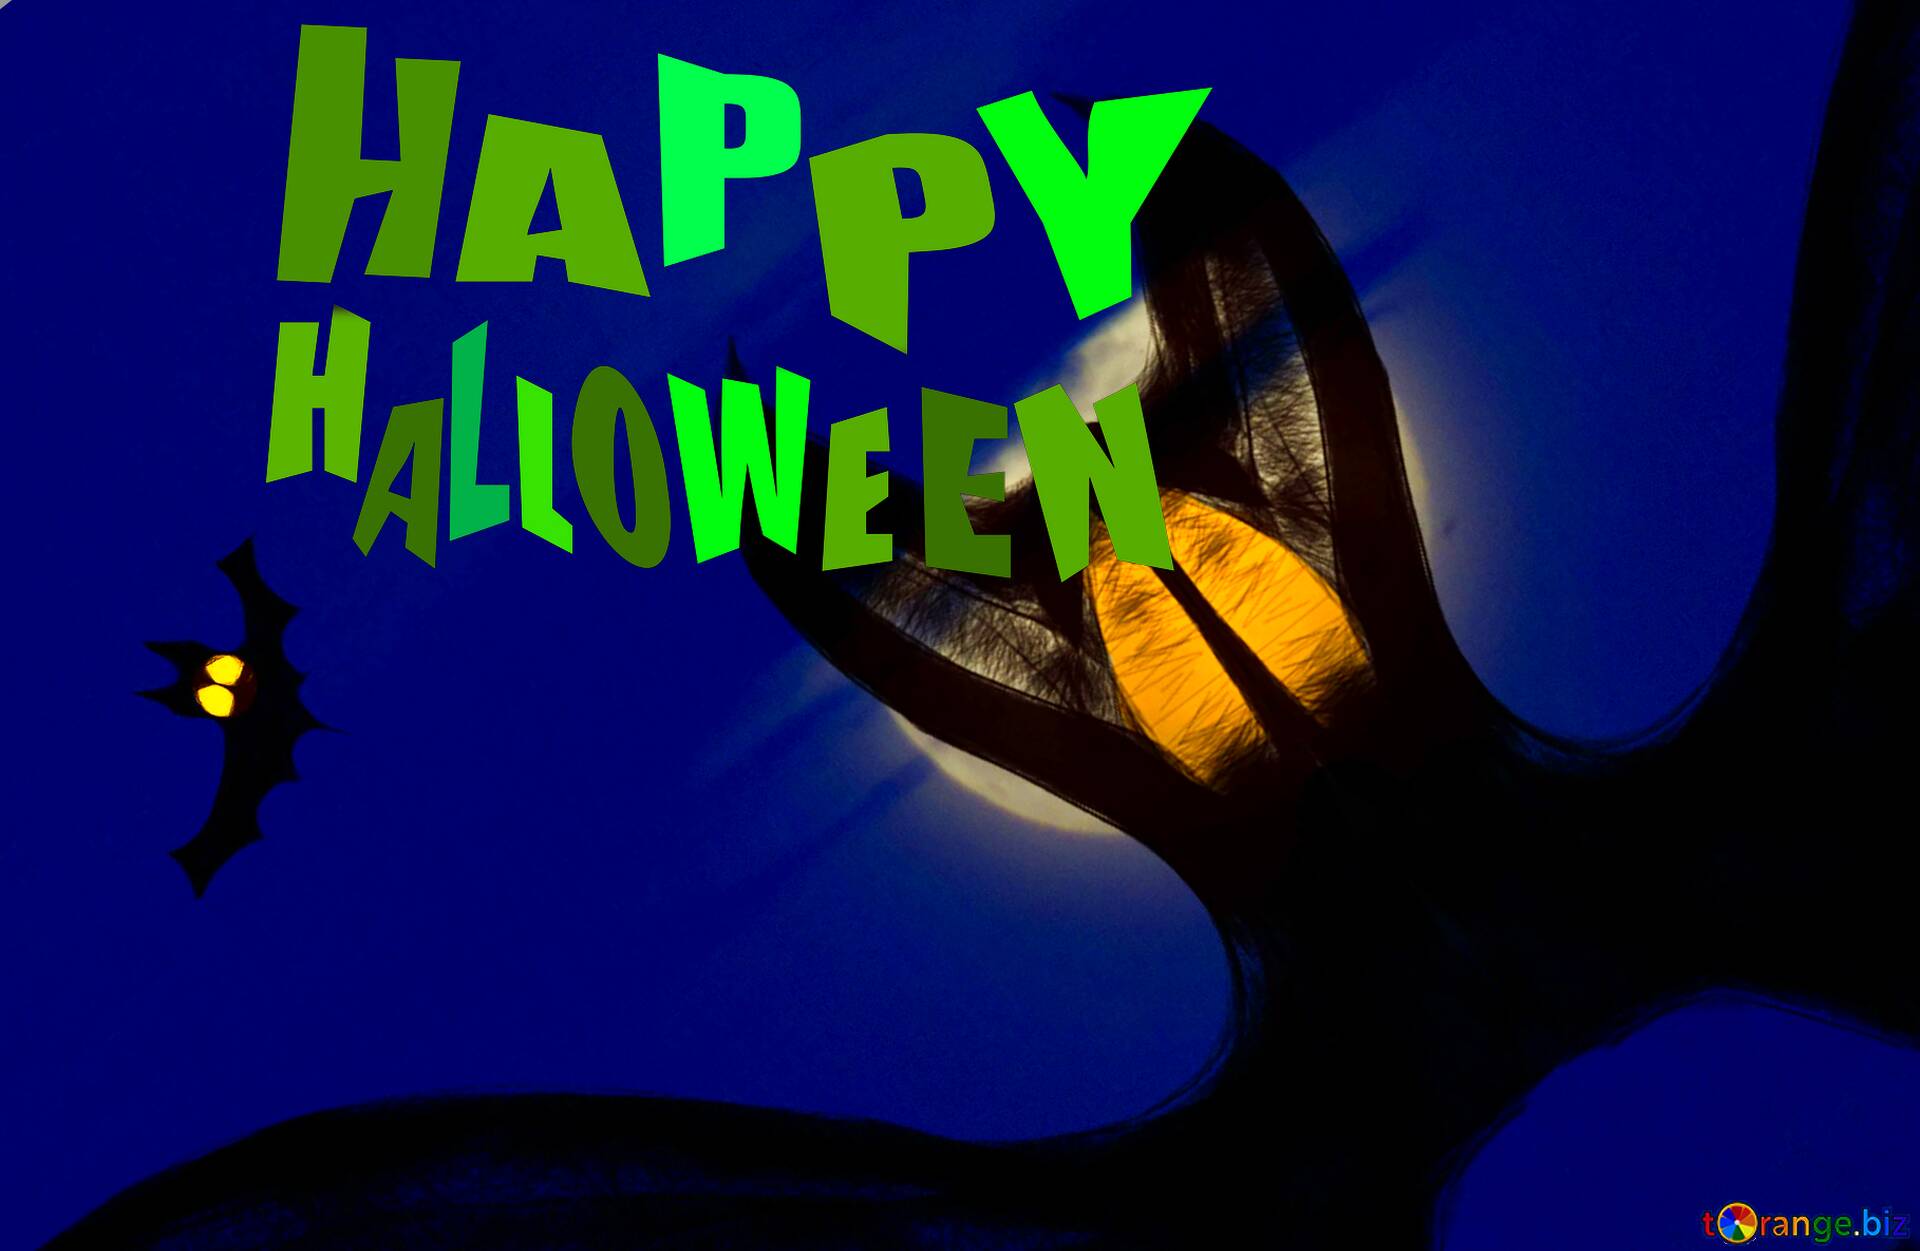 Download free picture Happy Halloween desktop wallpapers on CC